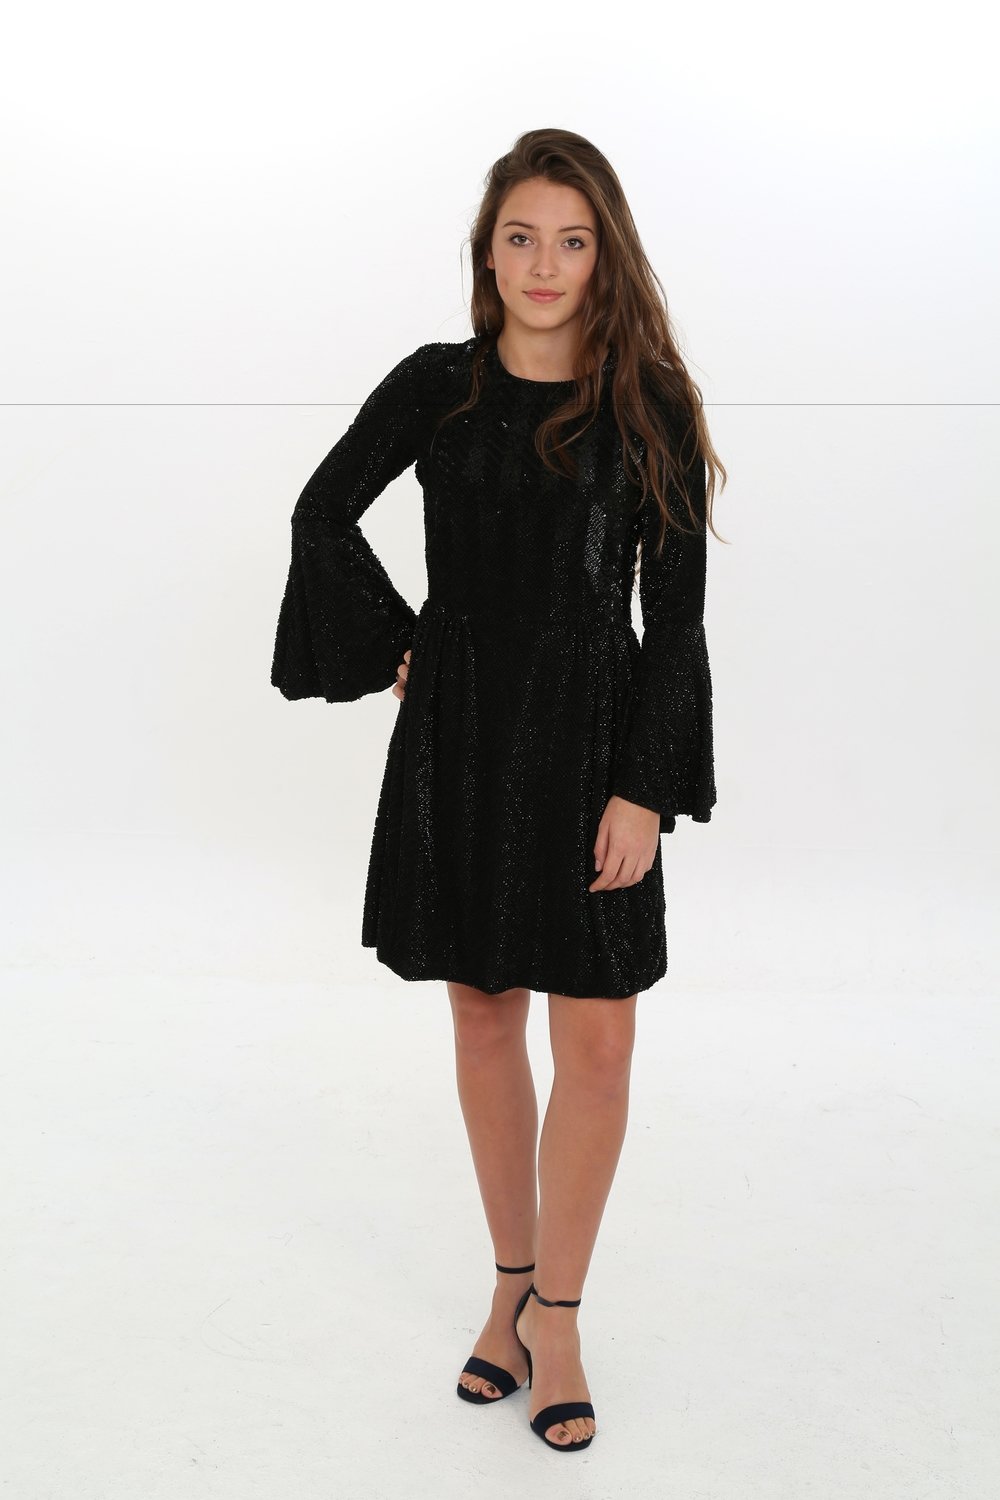 Celosia Short Black Dress